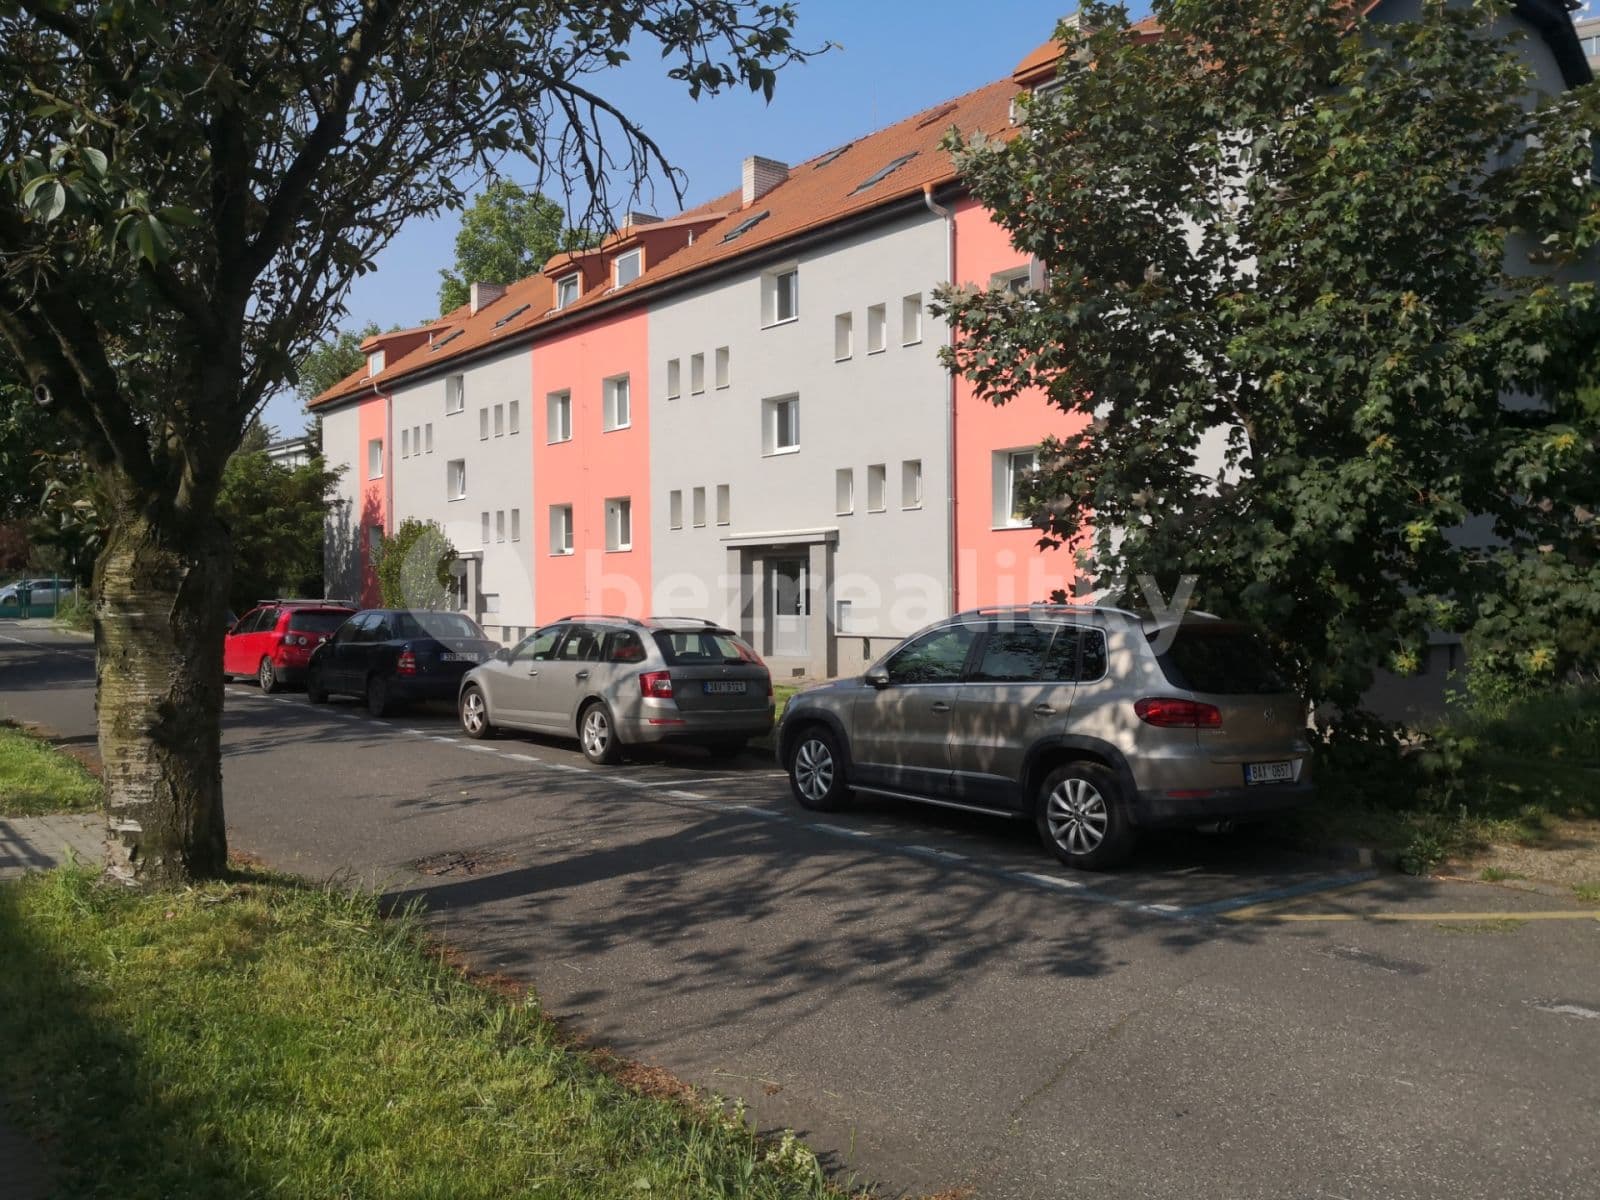 2 bedroom flat for sale, 58 m², Tvrdého, Prague, Prague